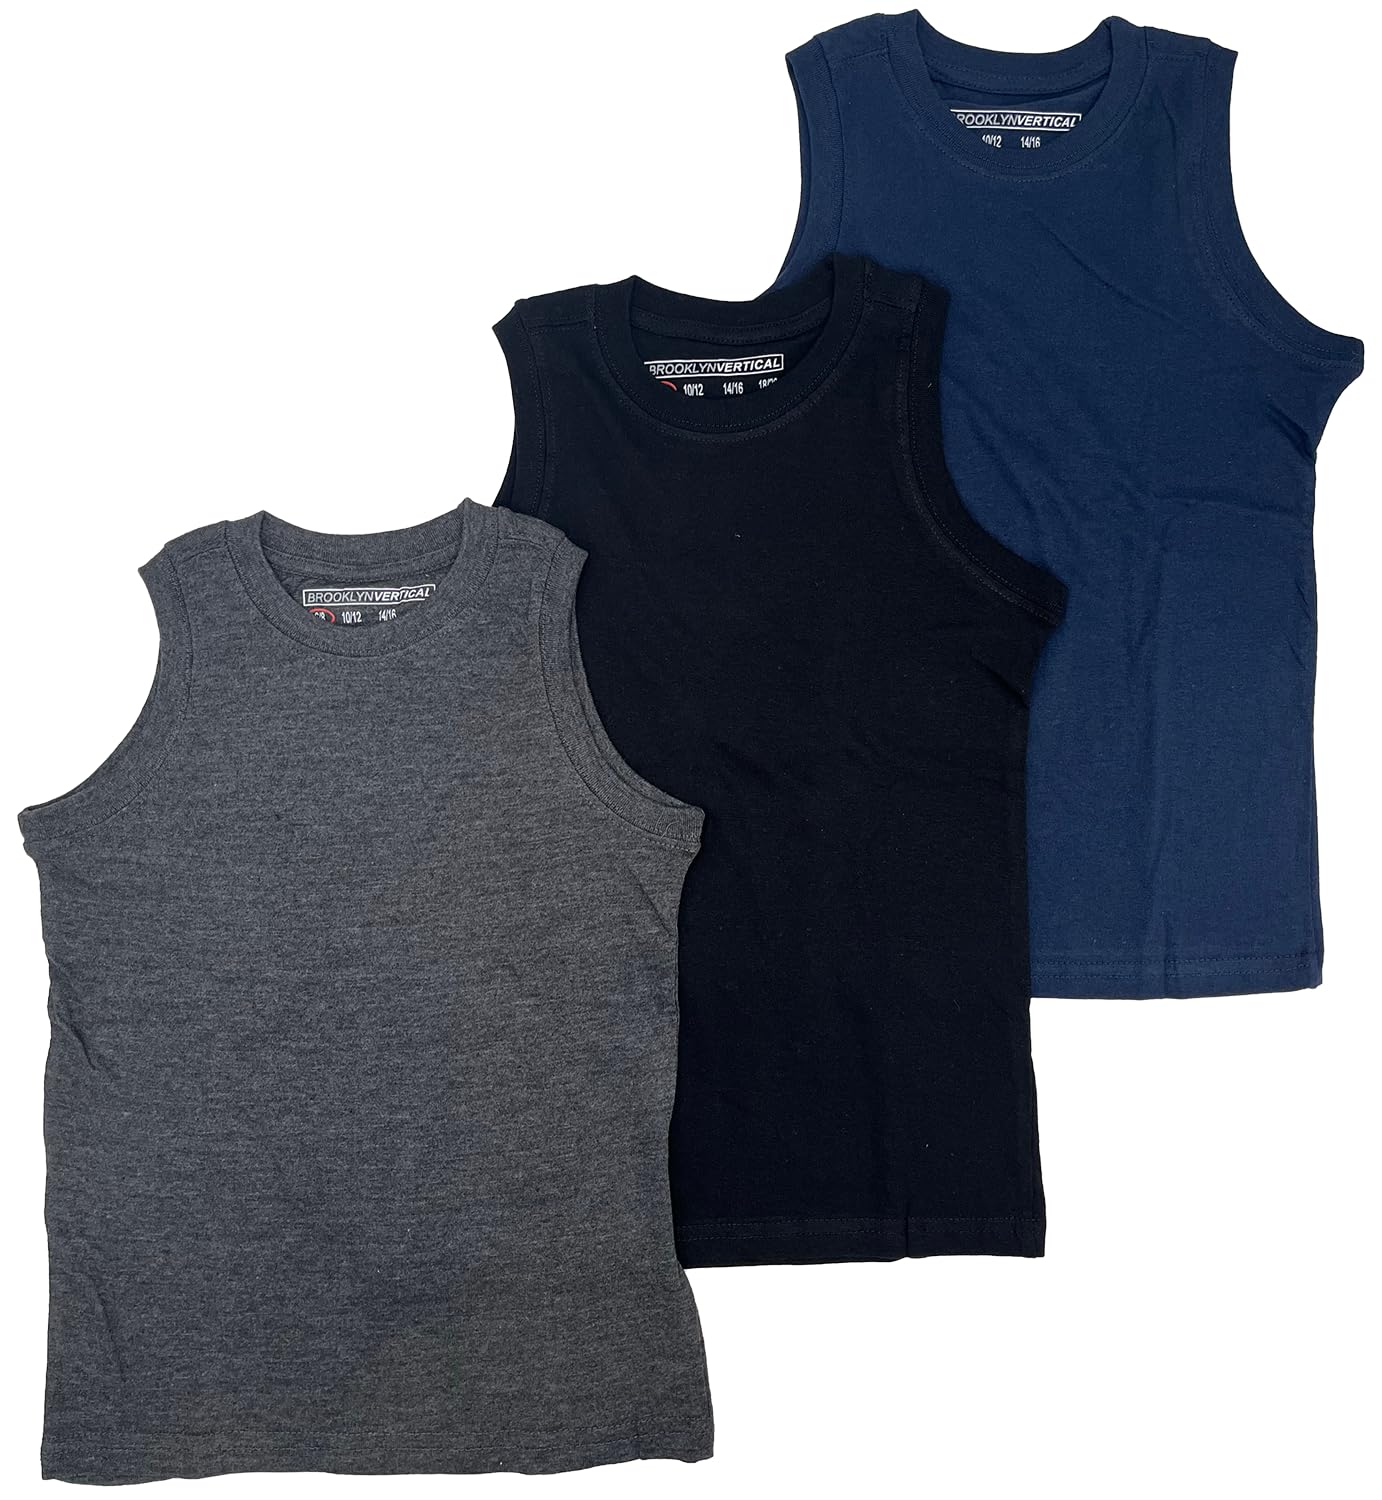 BROOKLYN VERTICAL Boys 3 Pack Muscle Shirt Sleeveless Tee - Tagless Cotton Super Soft